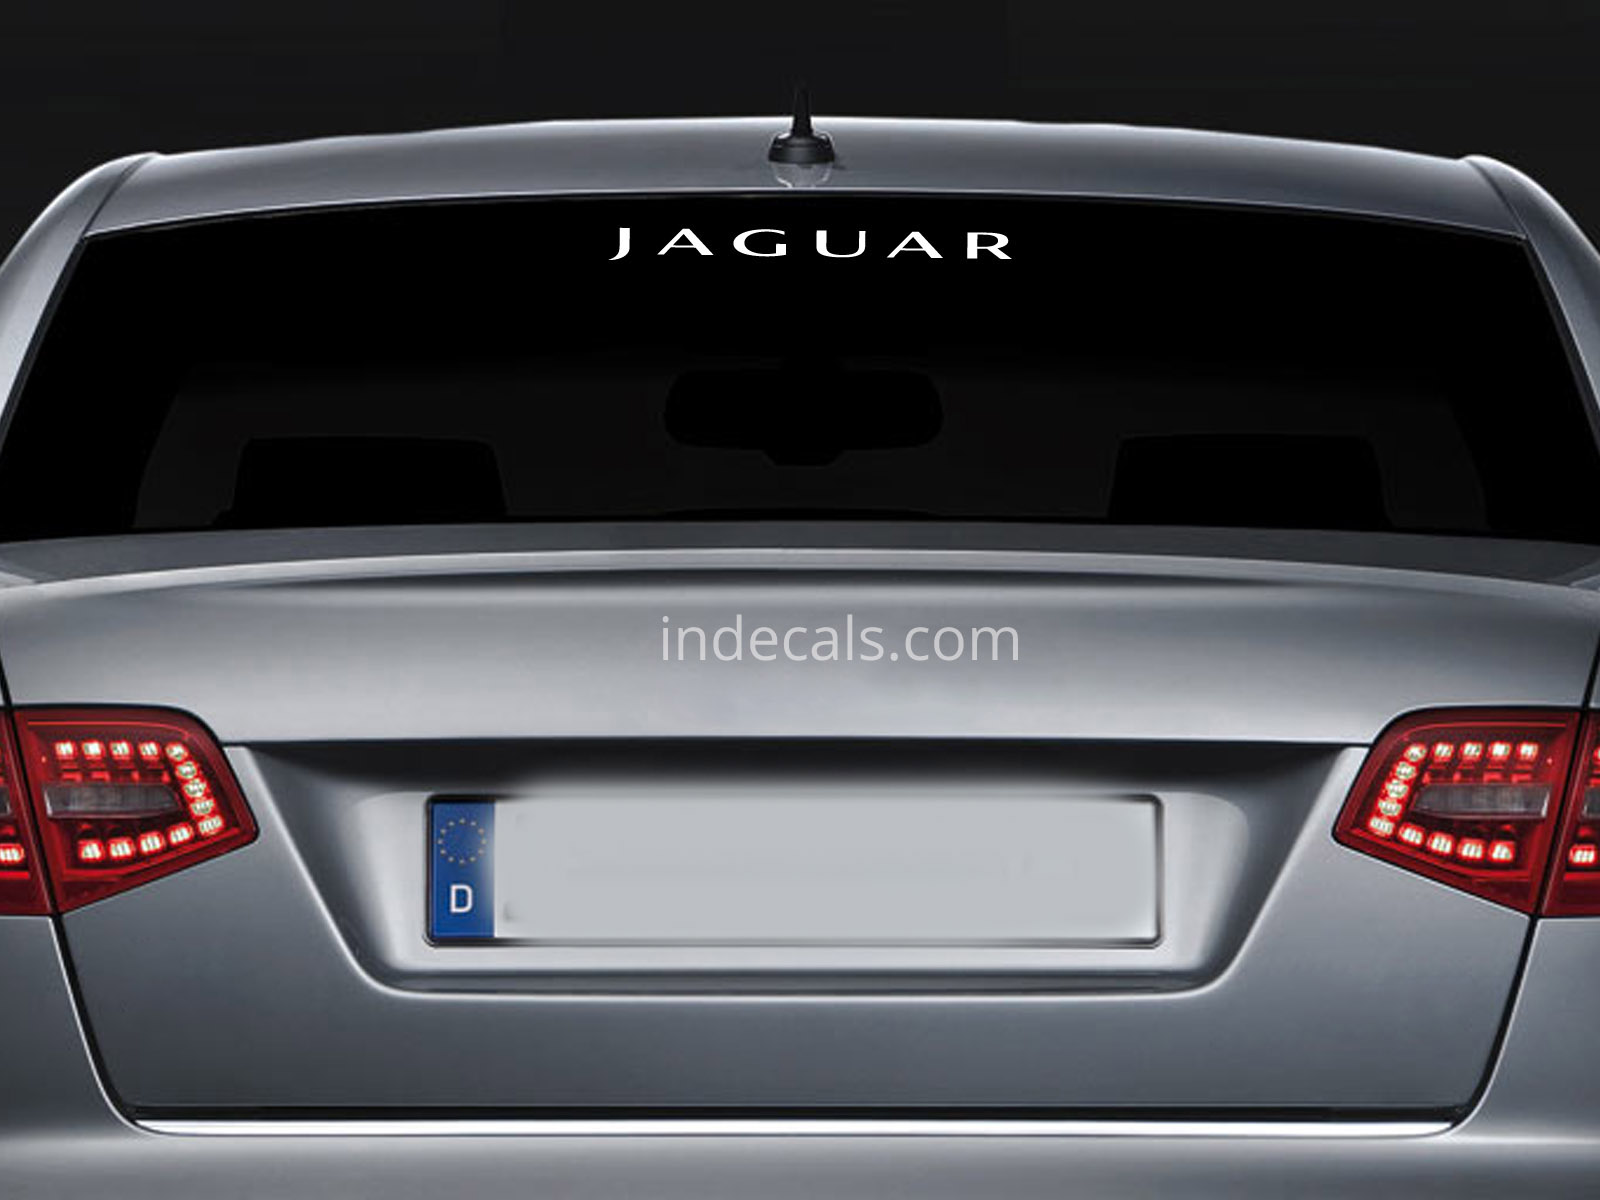 1 x Jaguar Sticker for Windshield or Back Window - White